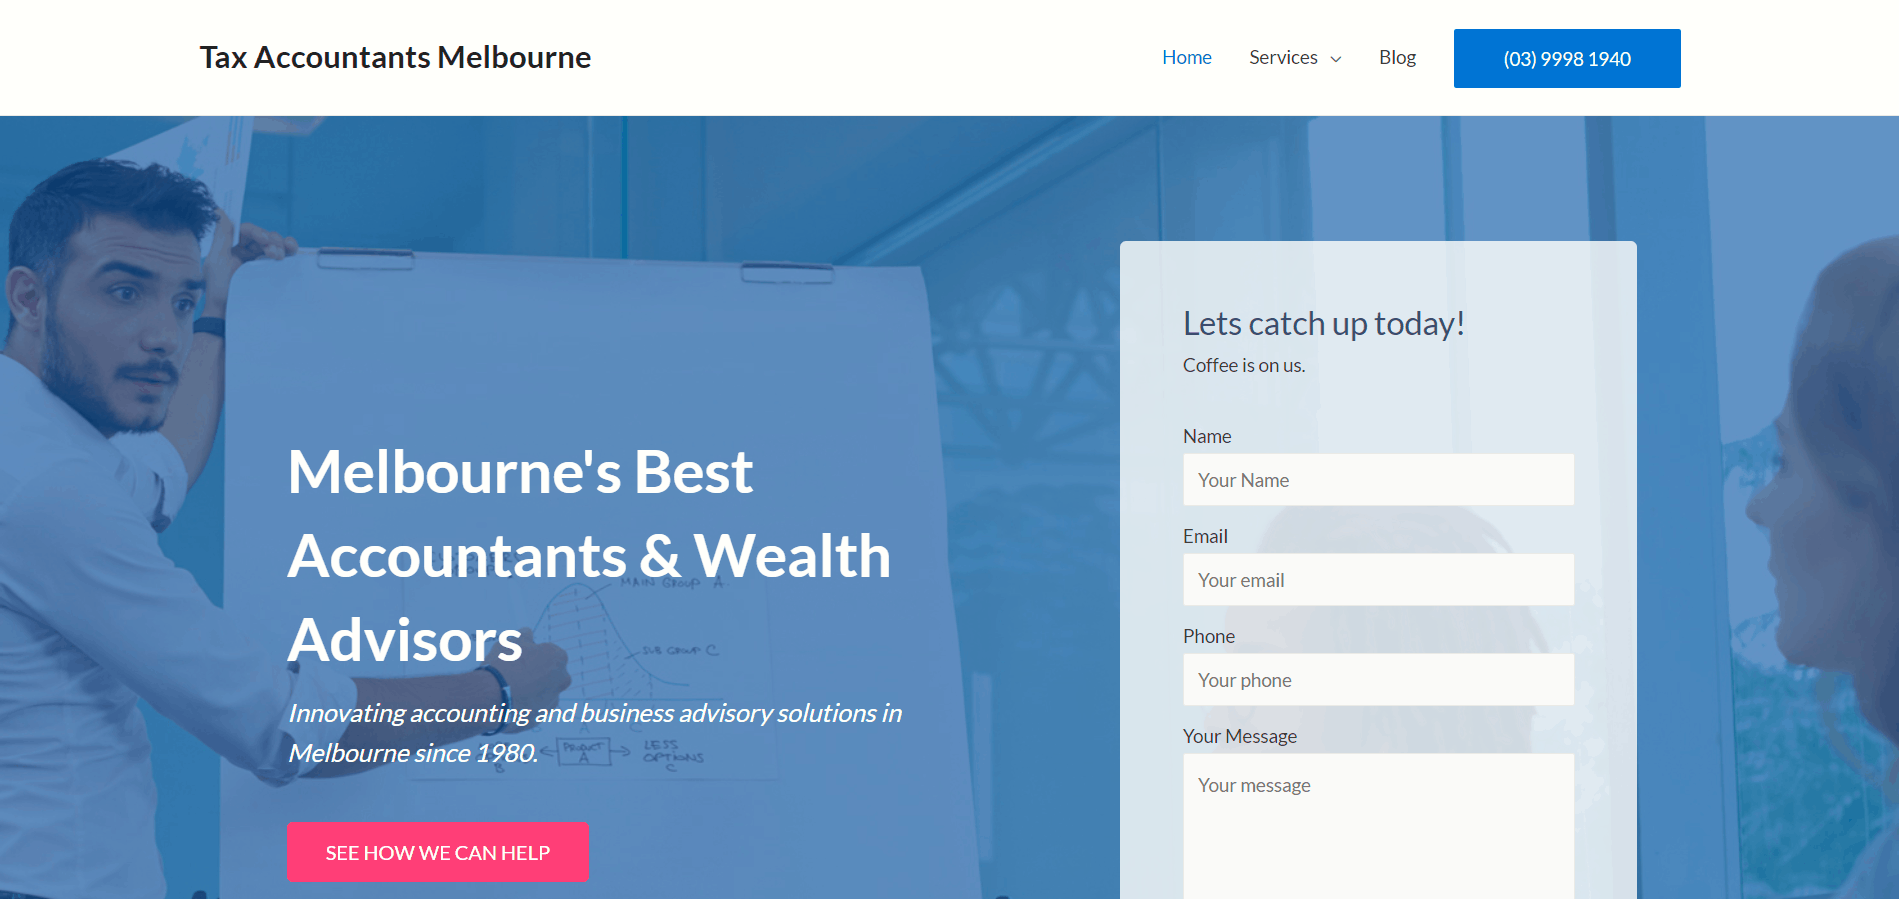 Tax Accountants Melbourne